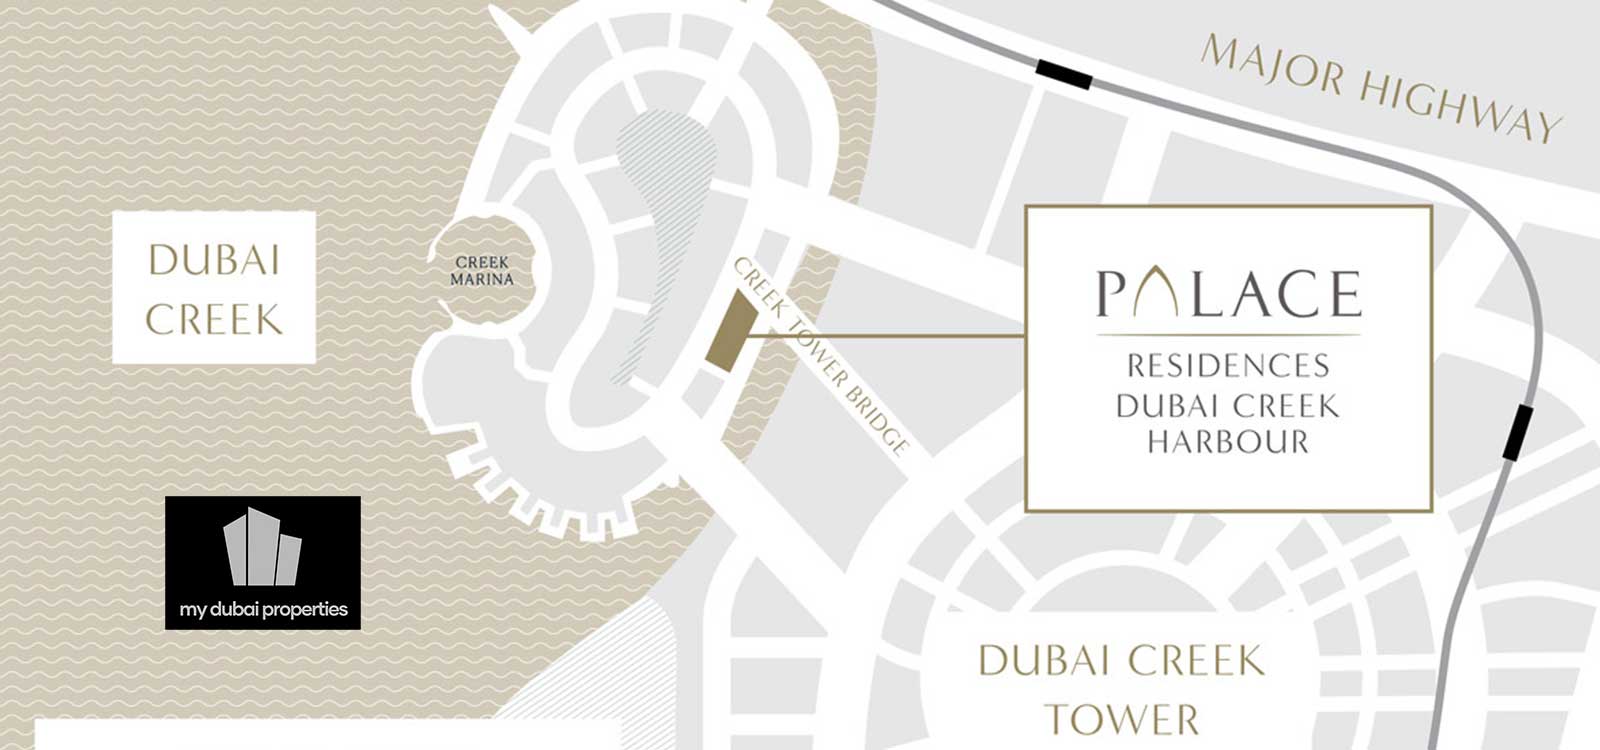 Palace Residences Location Map